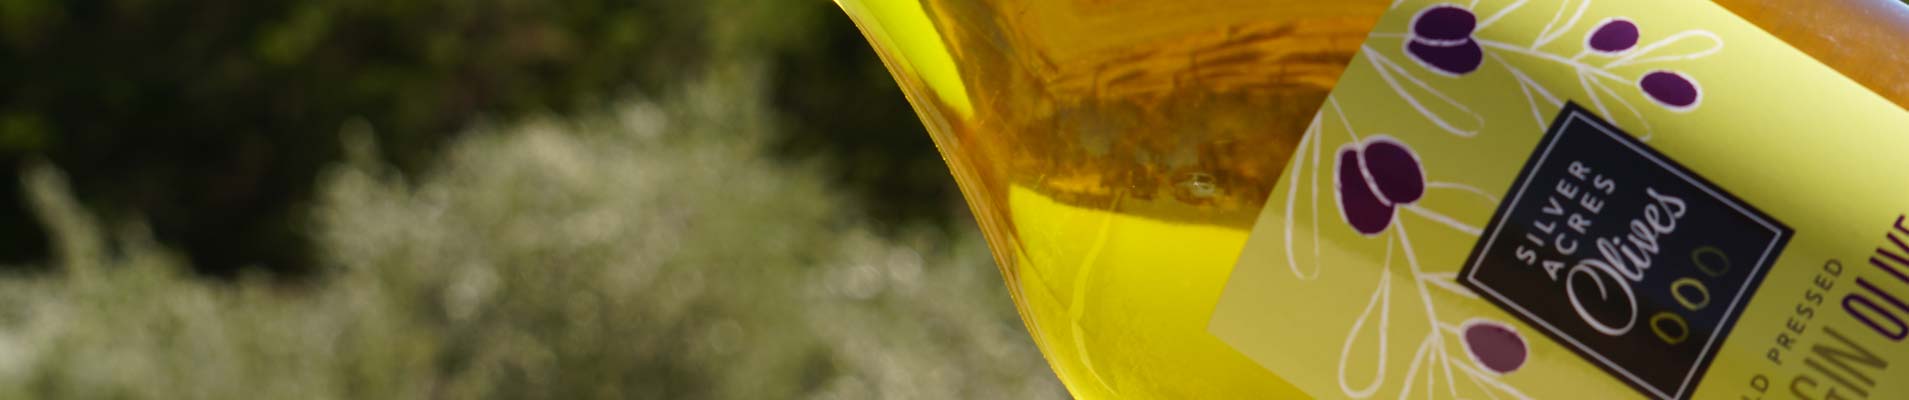 olive oil sales adelaide